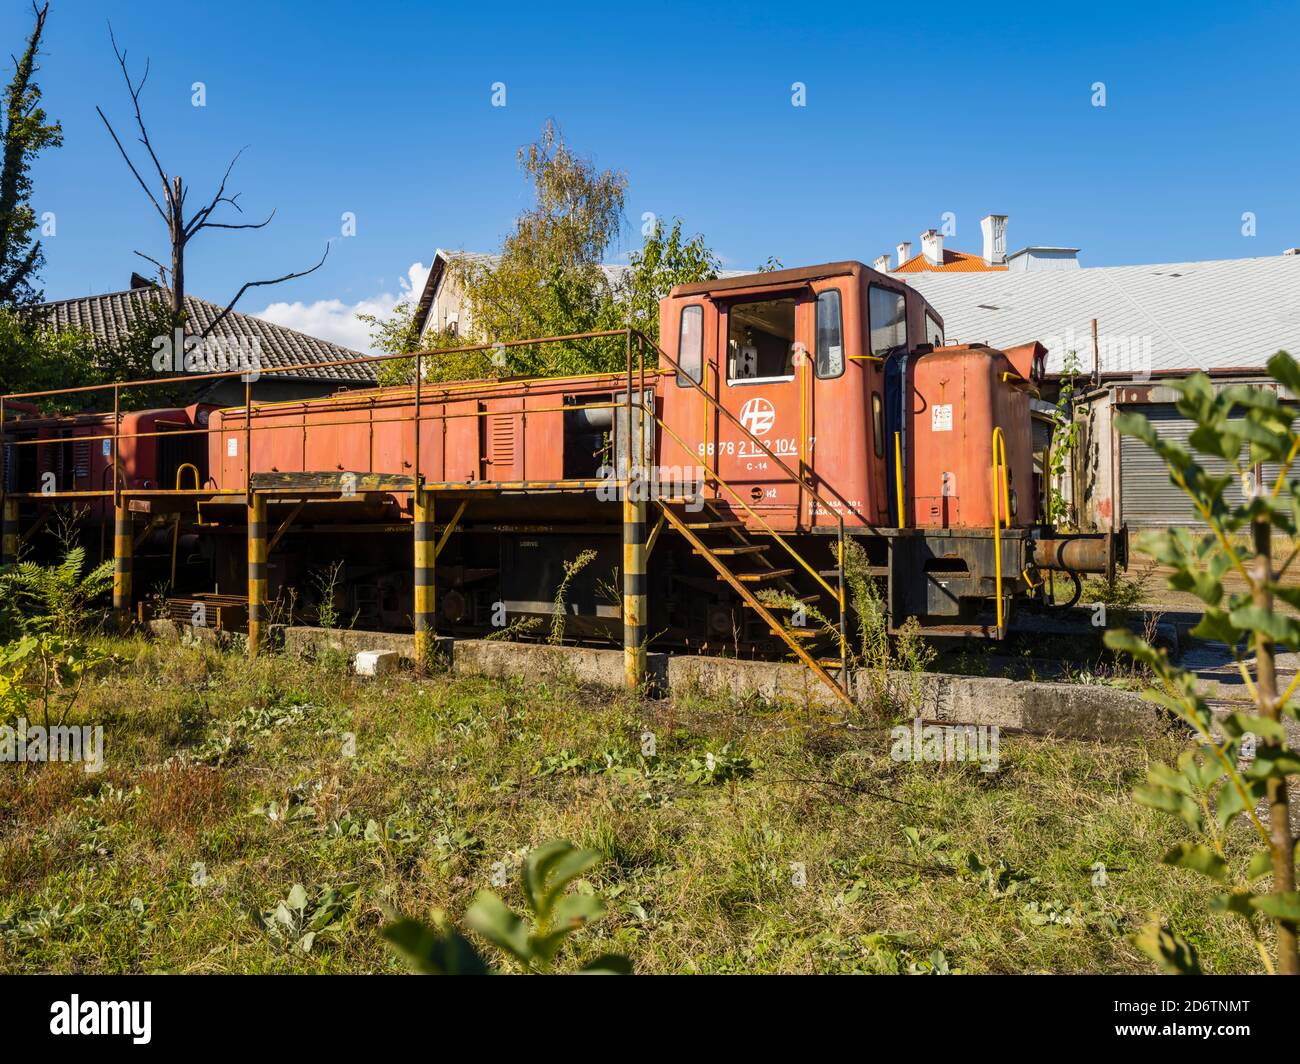 Abandoned derelict loco locomotive in Rijeka in Croatia Europe Stock Photo